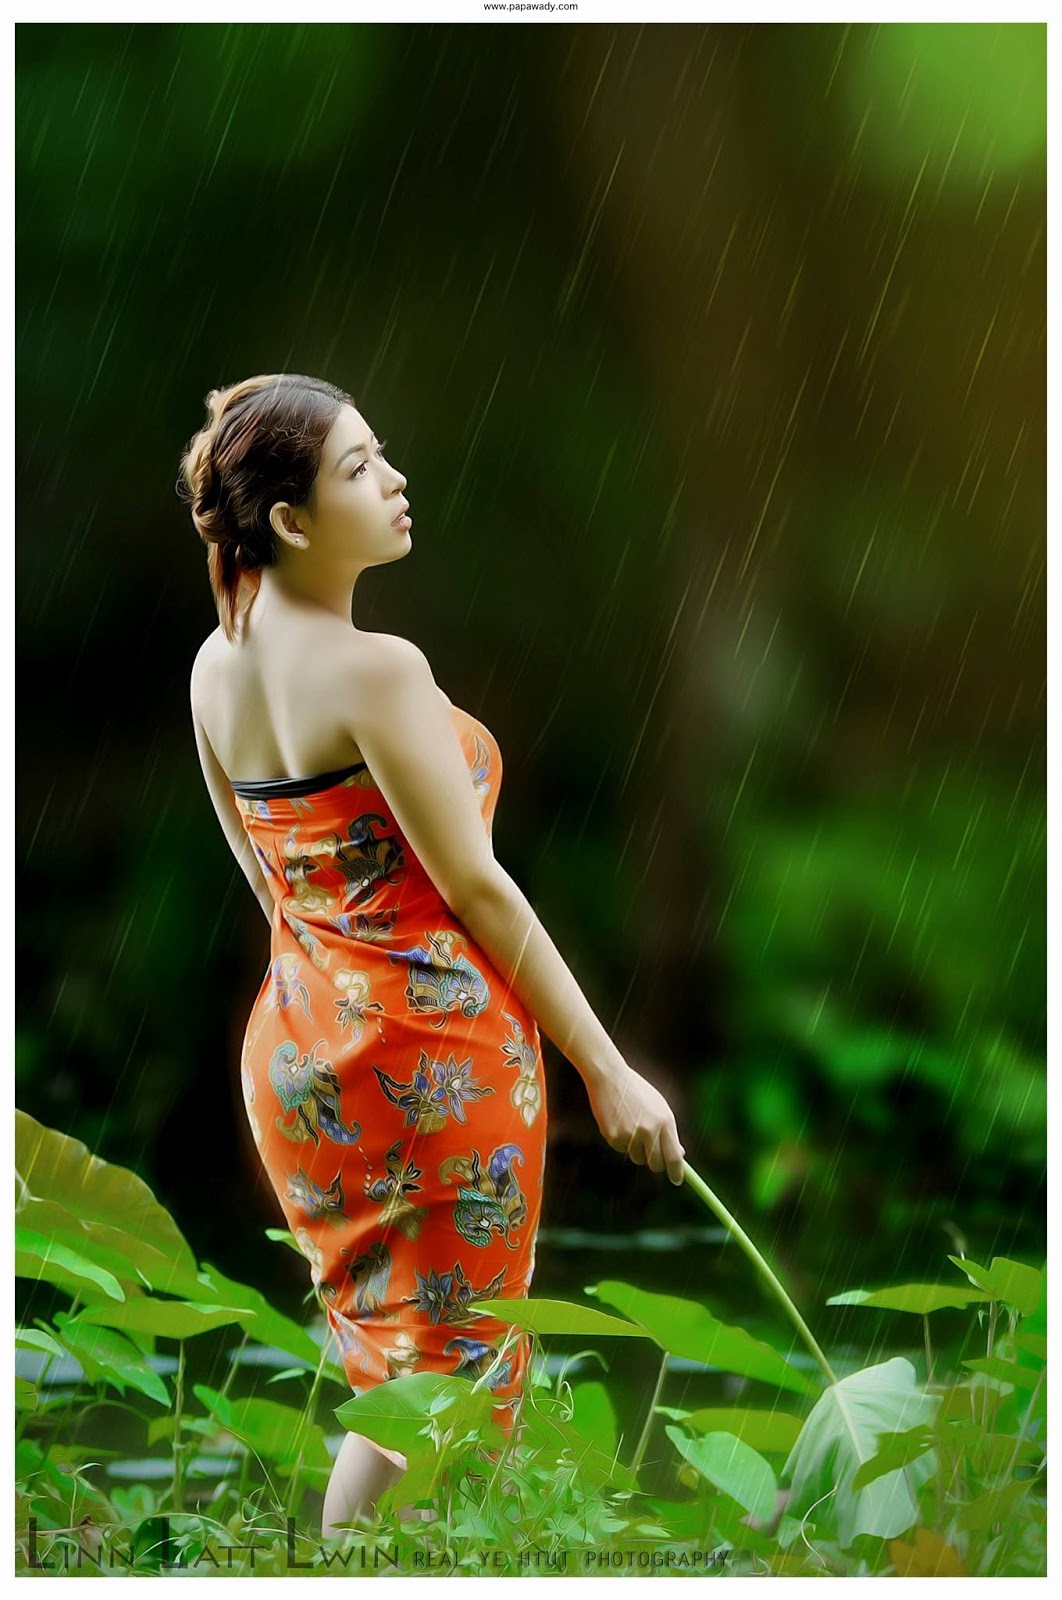 Lin Latt Lwin Outdoor Photoshoot Album 2 